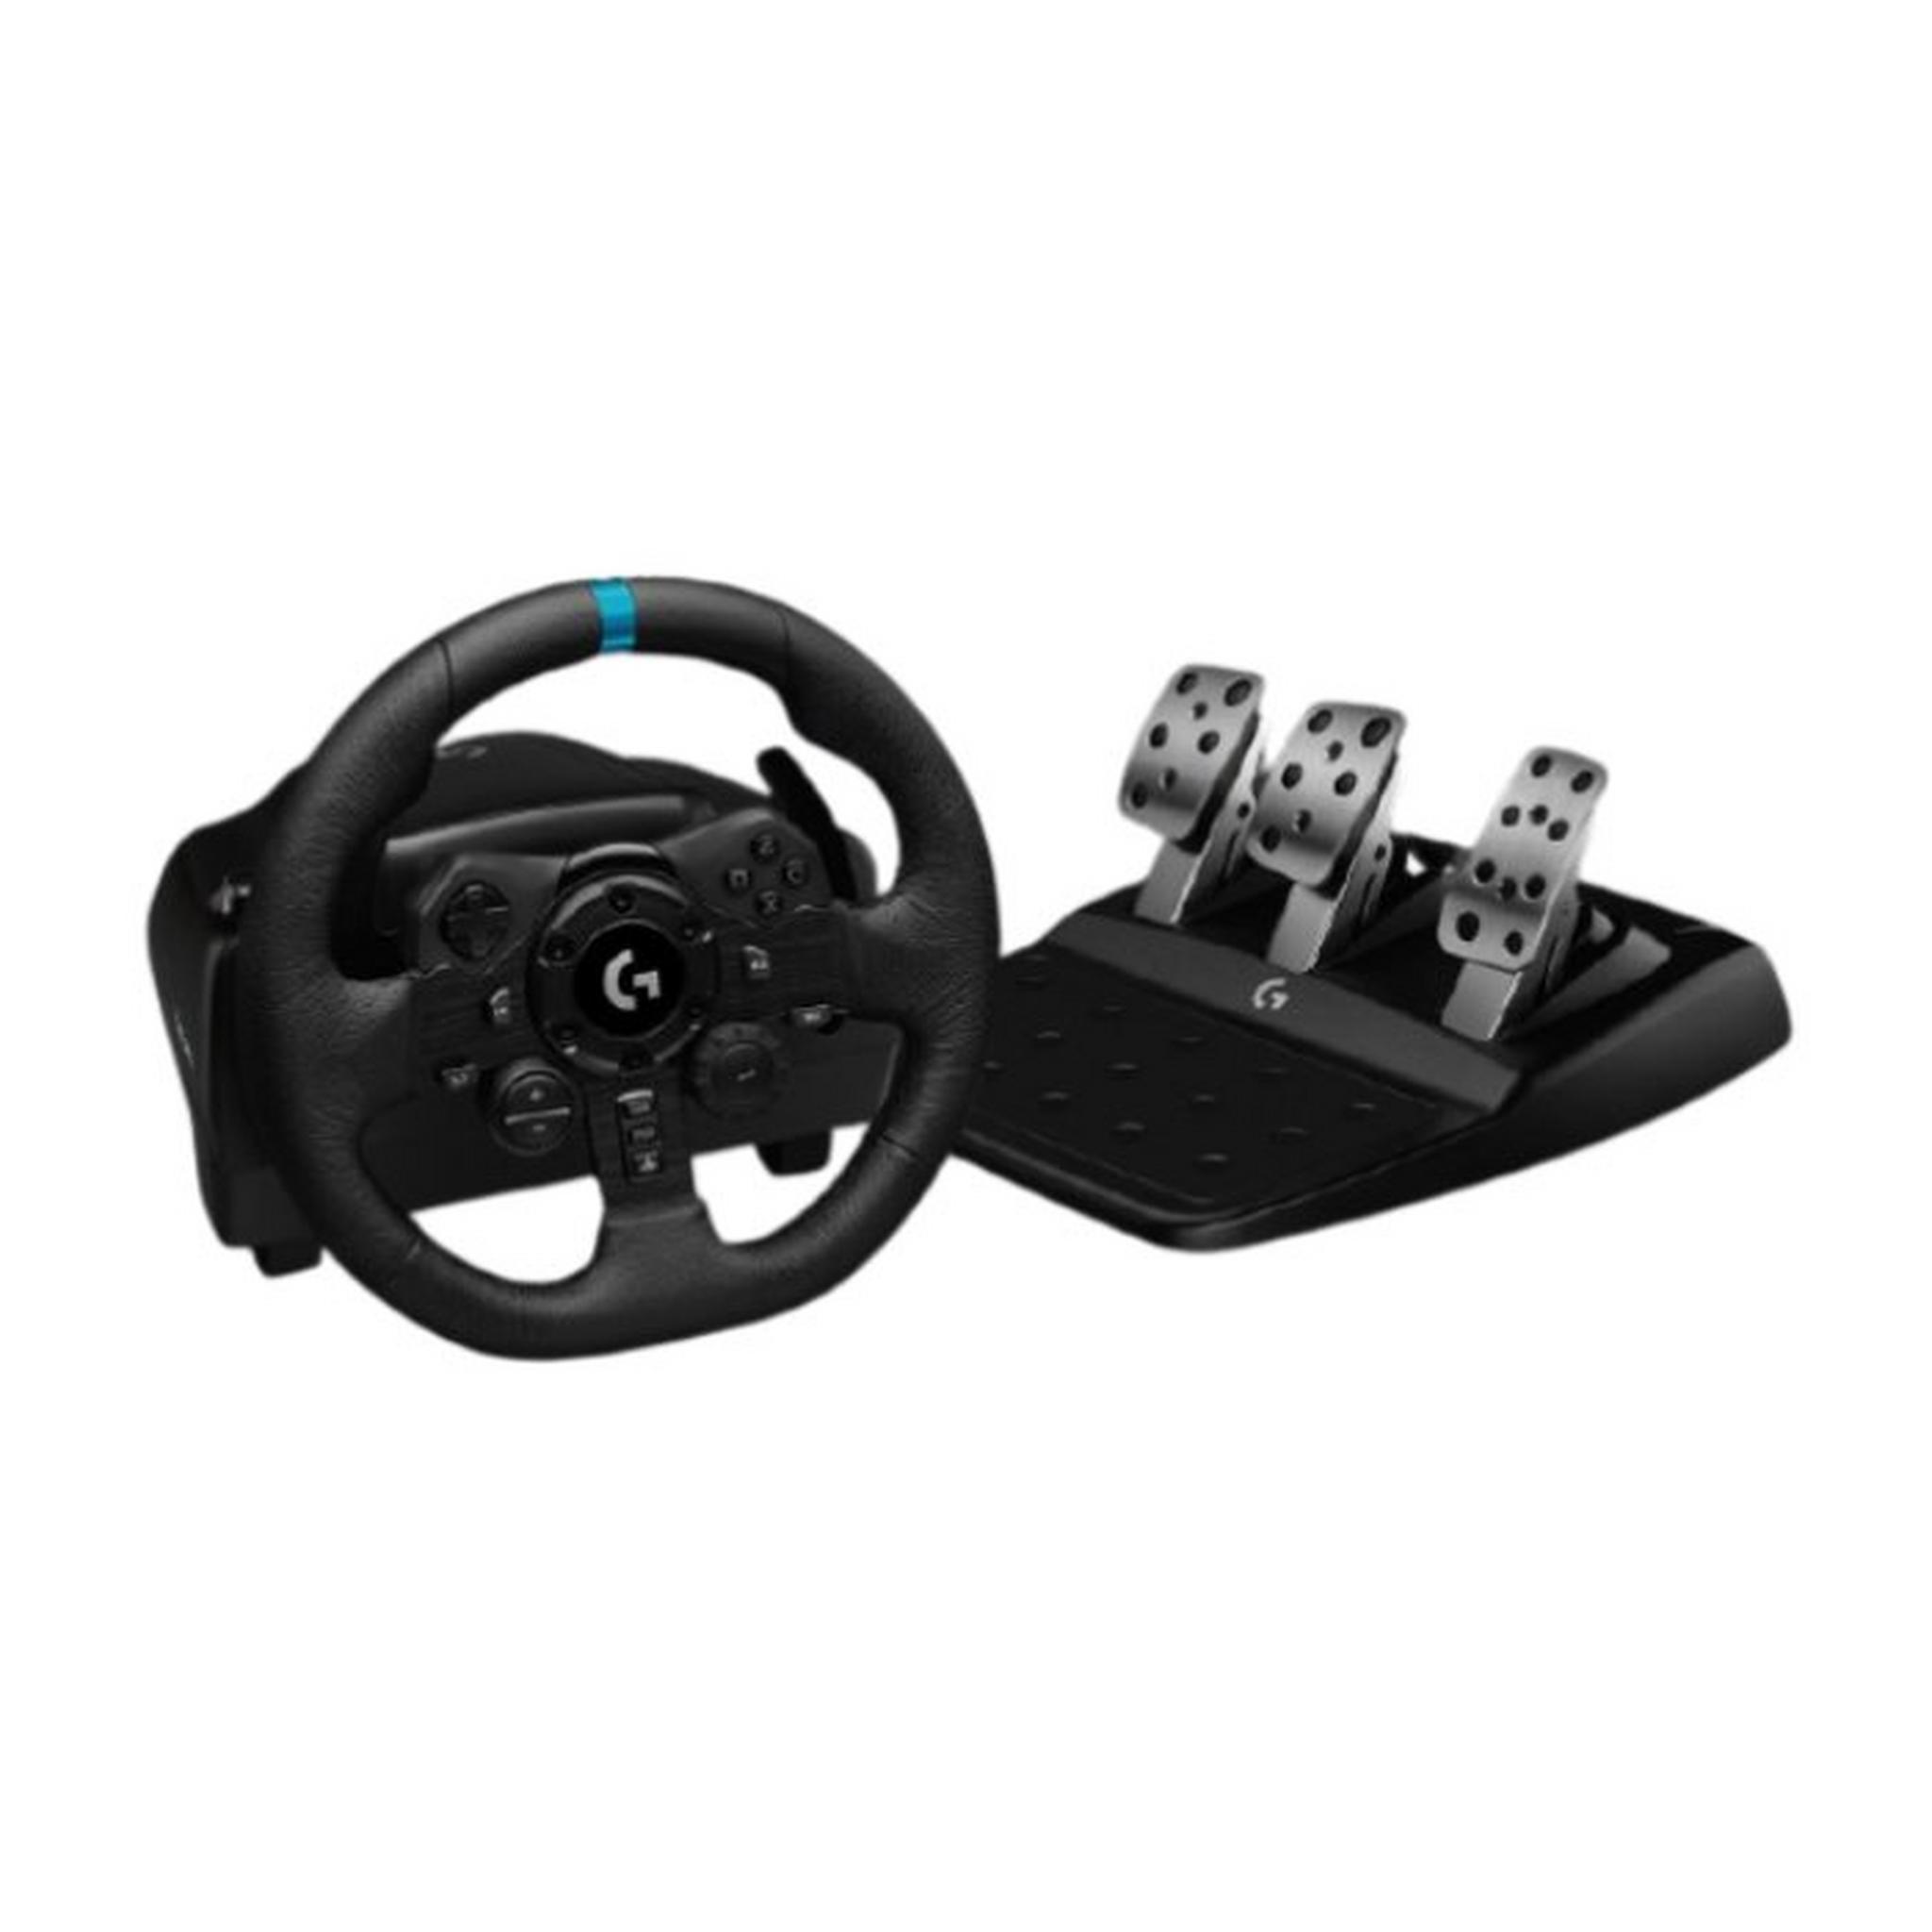 Logitech G923 TrueForce Slim Xbox and PC Racing Wheel